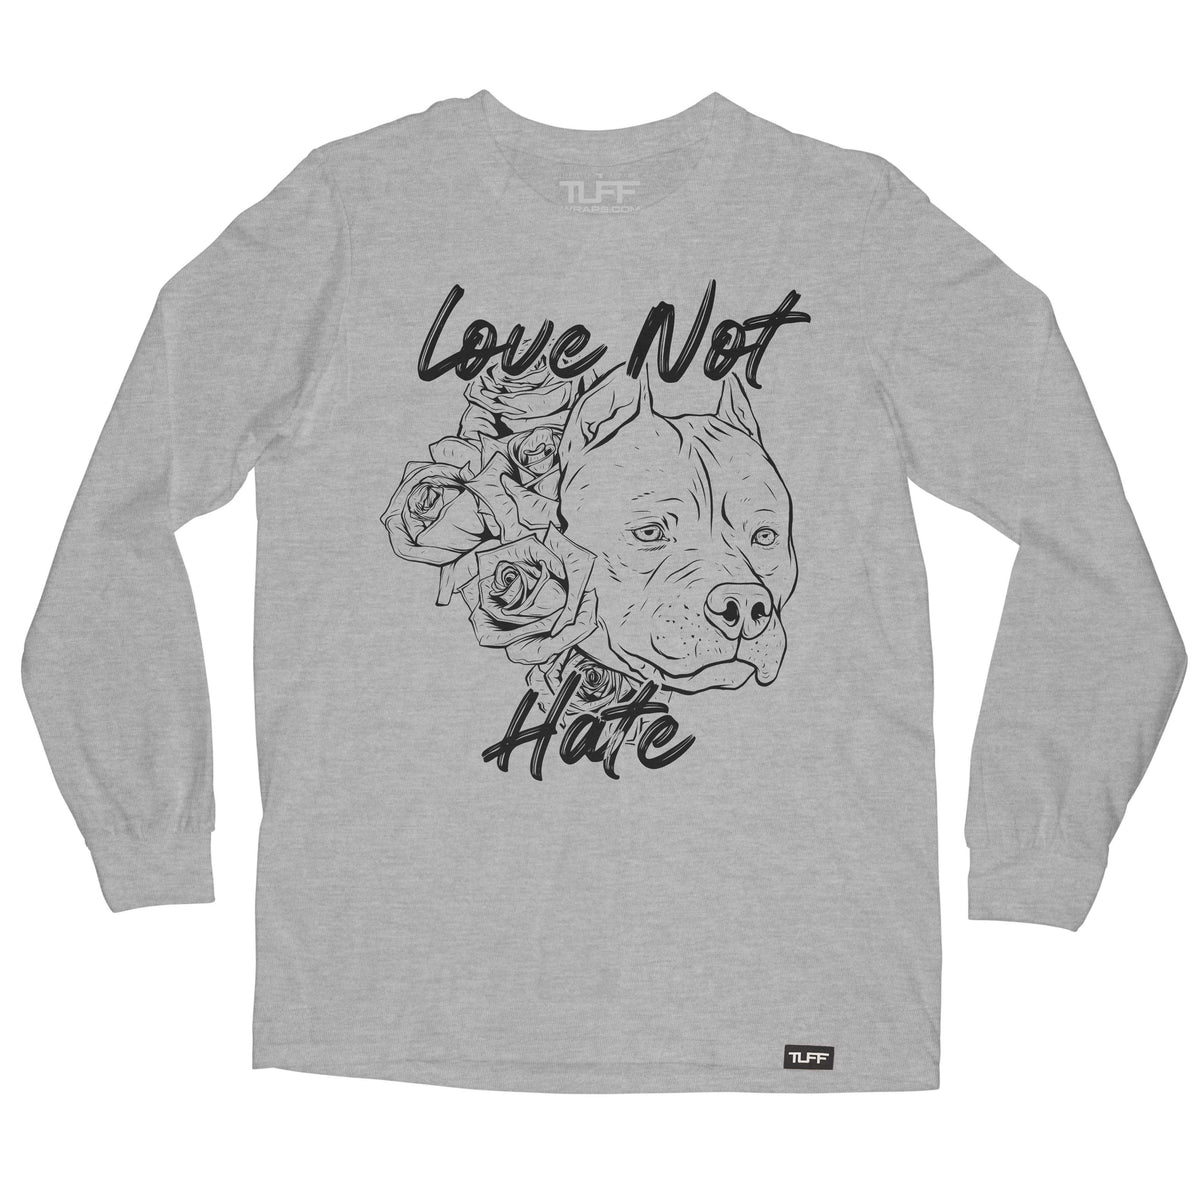 Love Not Hate Long Sleeve Tee S / Heather Gray TuffWraps.com